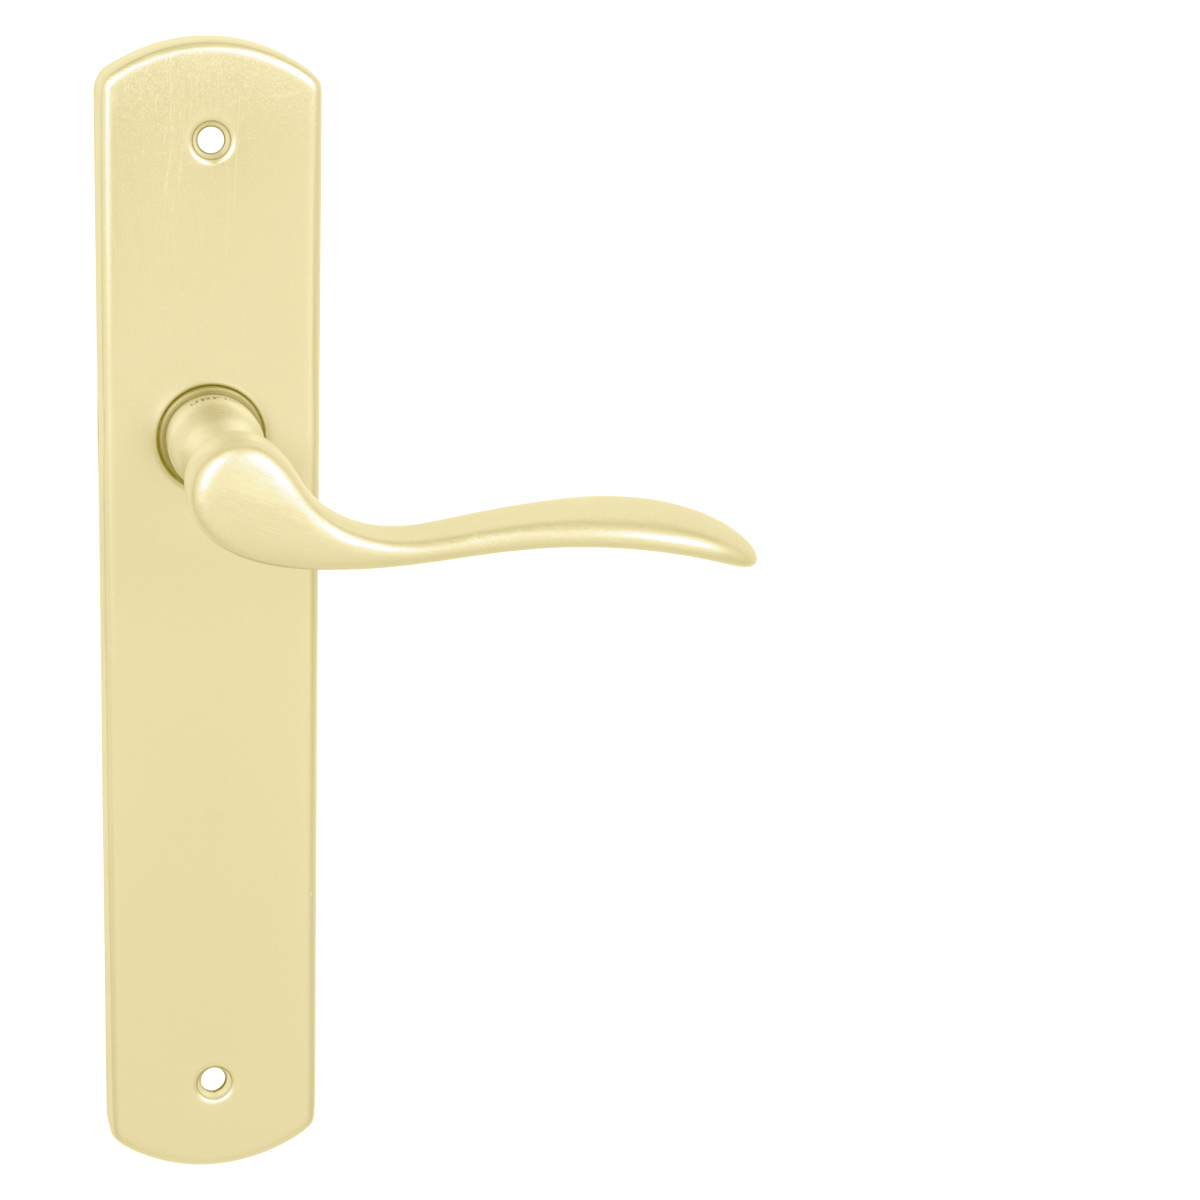 UC - MINA - VS WC kľúč, 72 mm, kľučka/kľučka